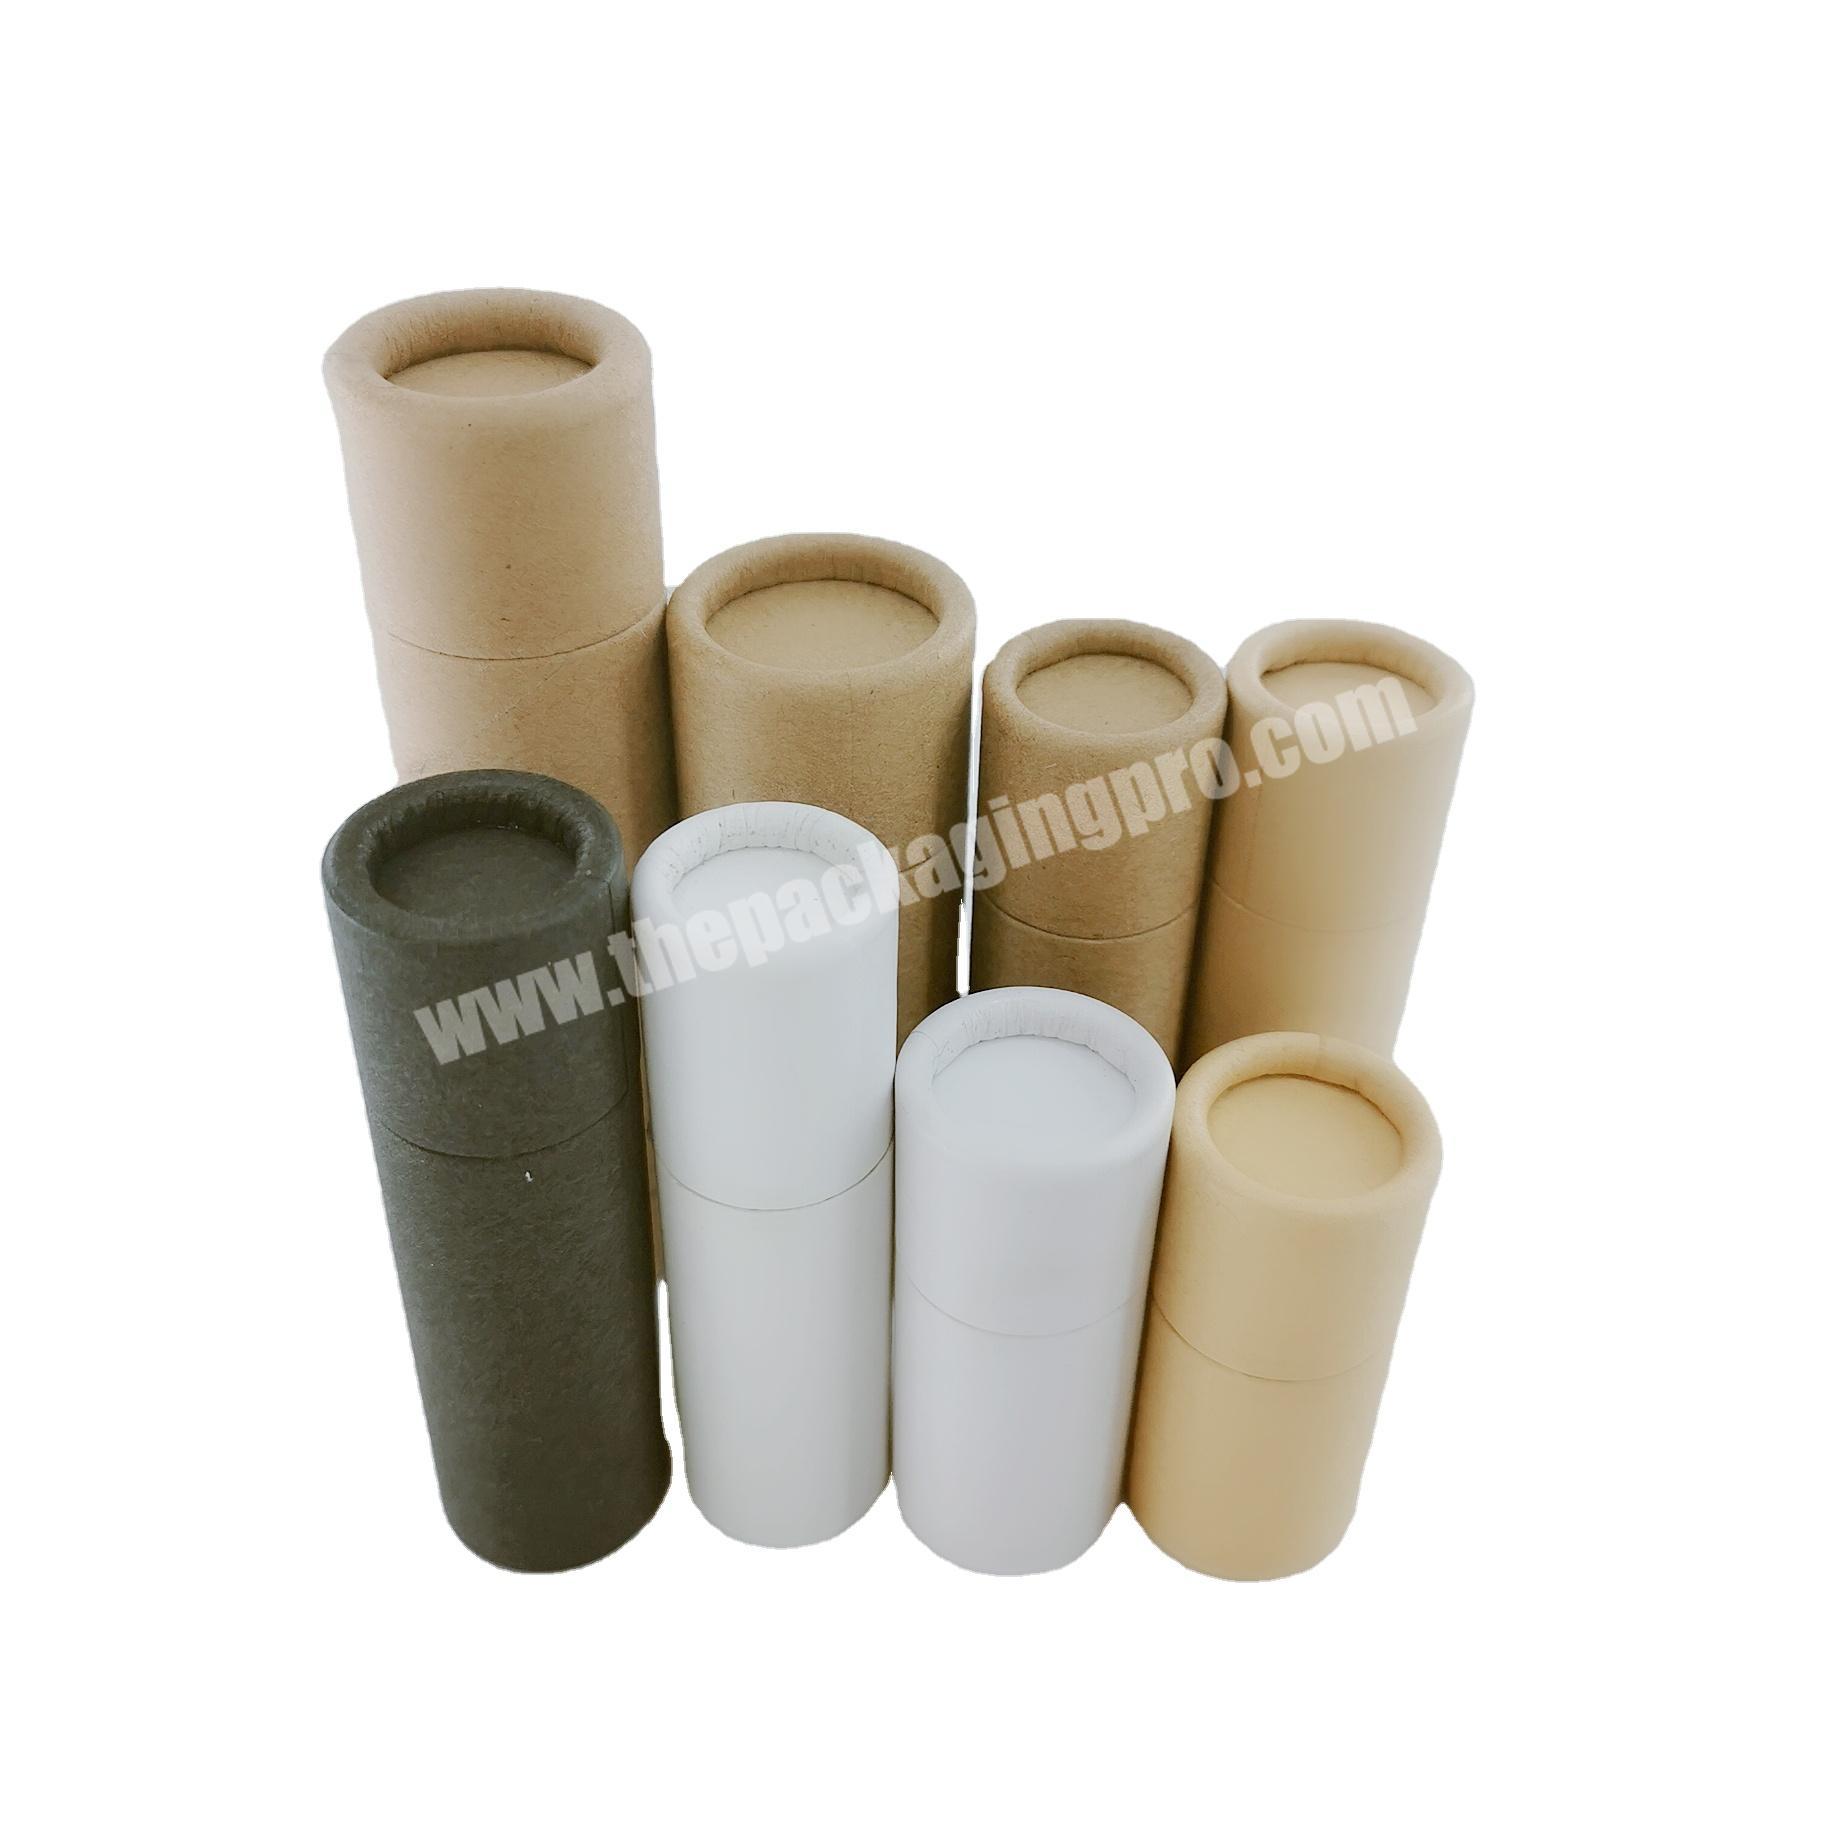 0.3oz cardboard tubes for lip balm